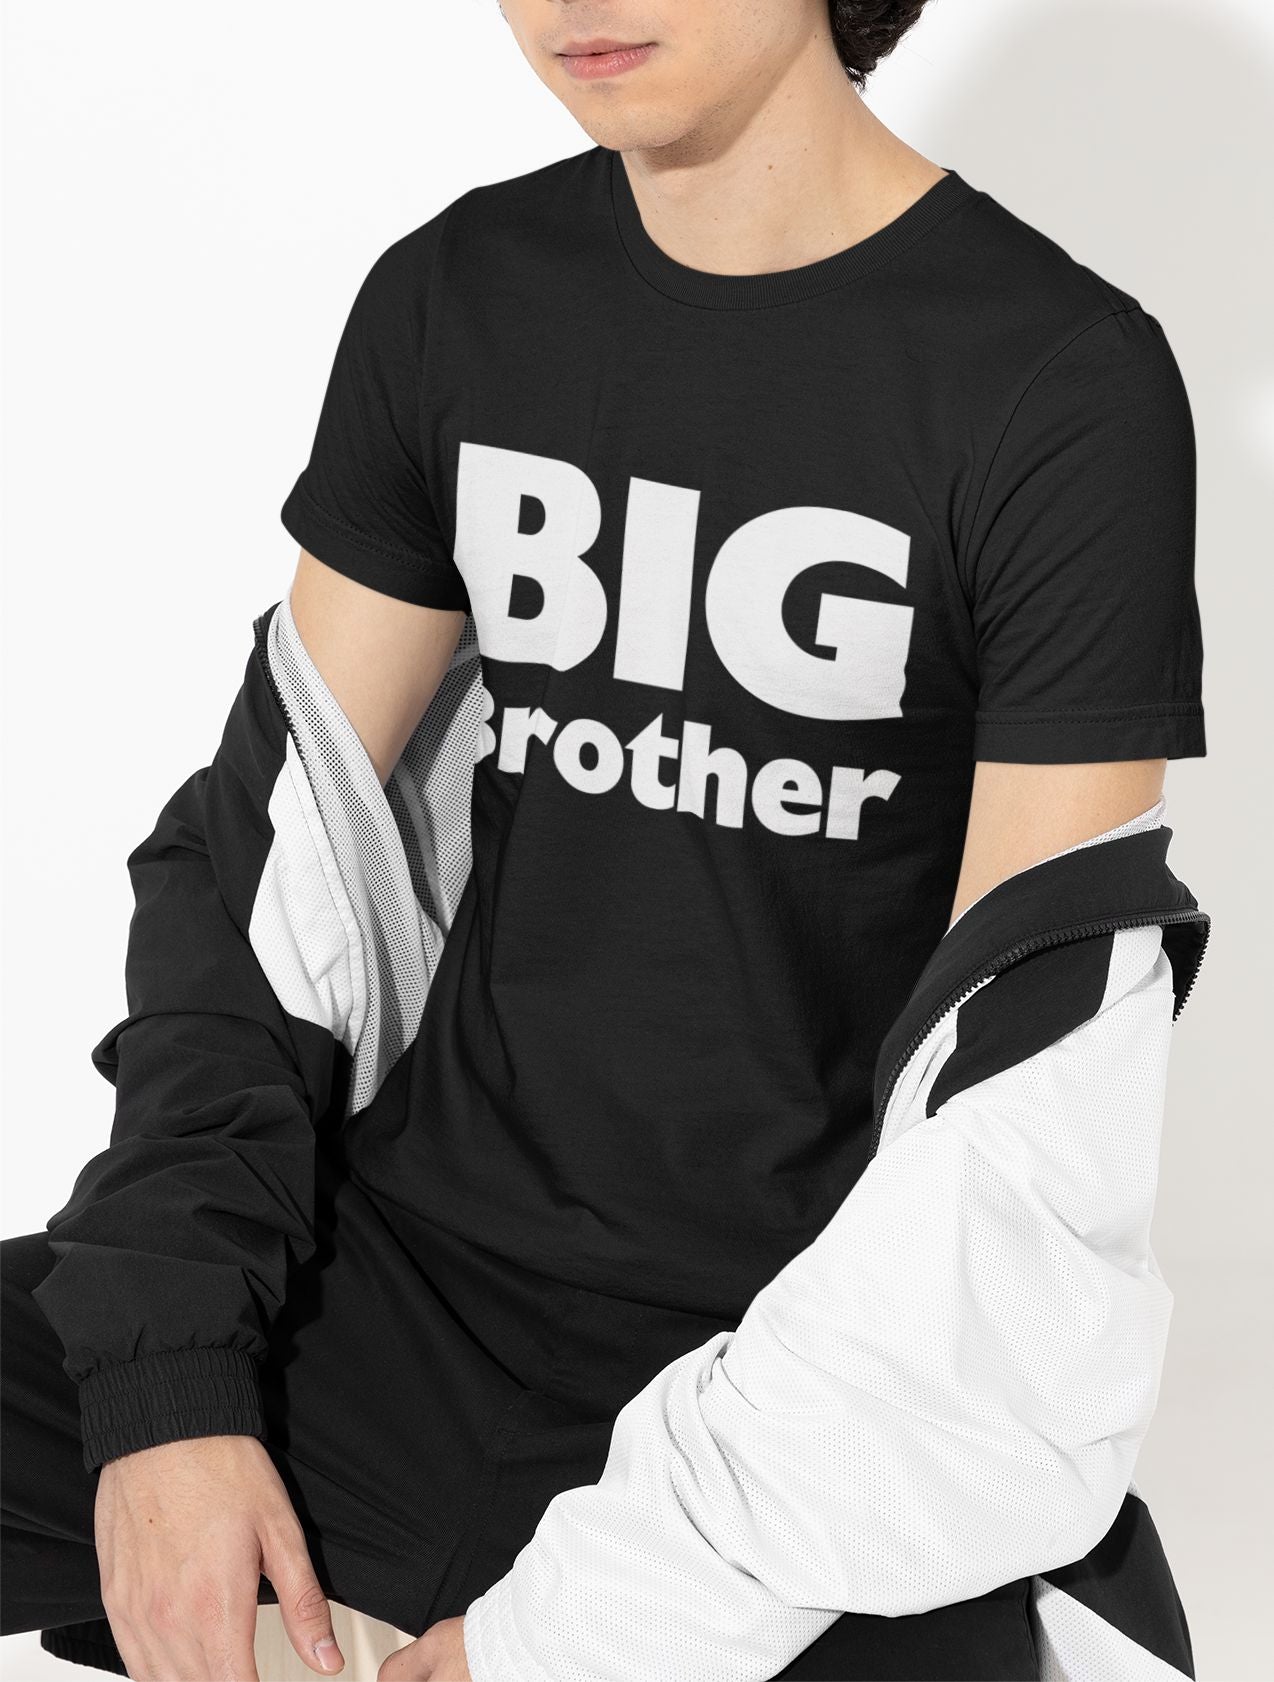 BIG BROTHER Adult T-Shirt (#861-1)